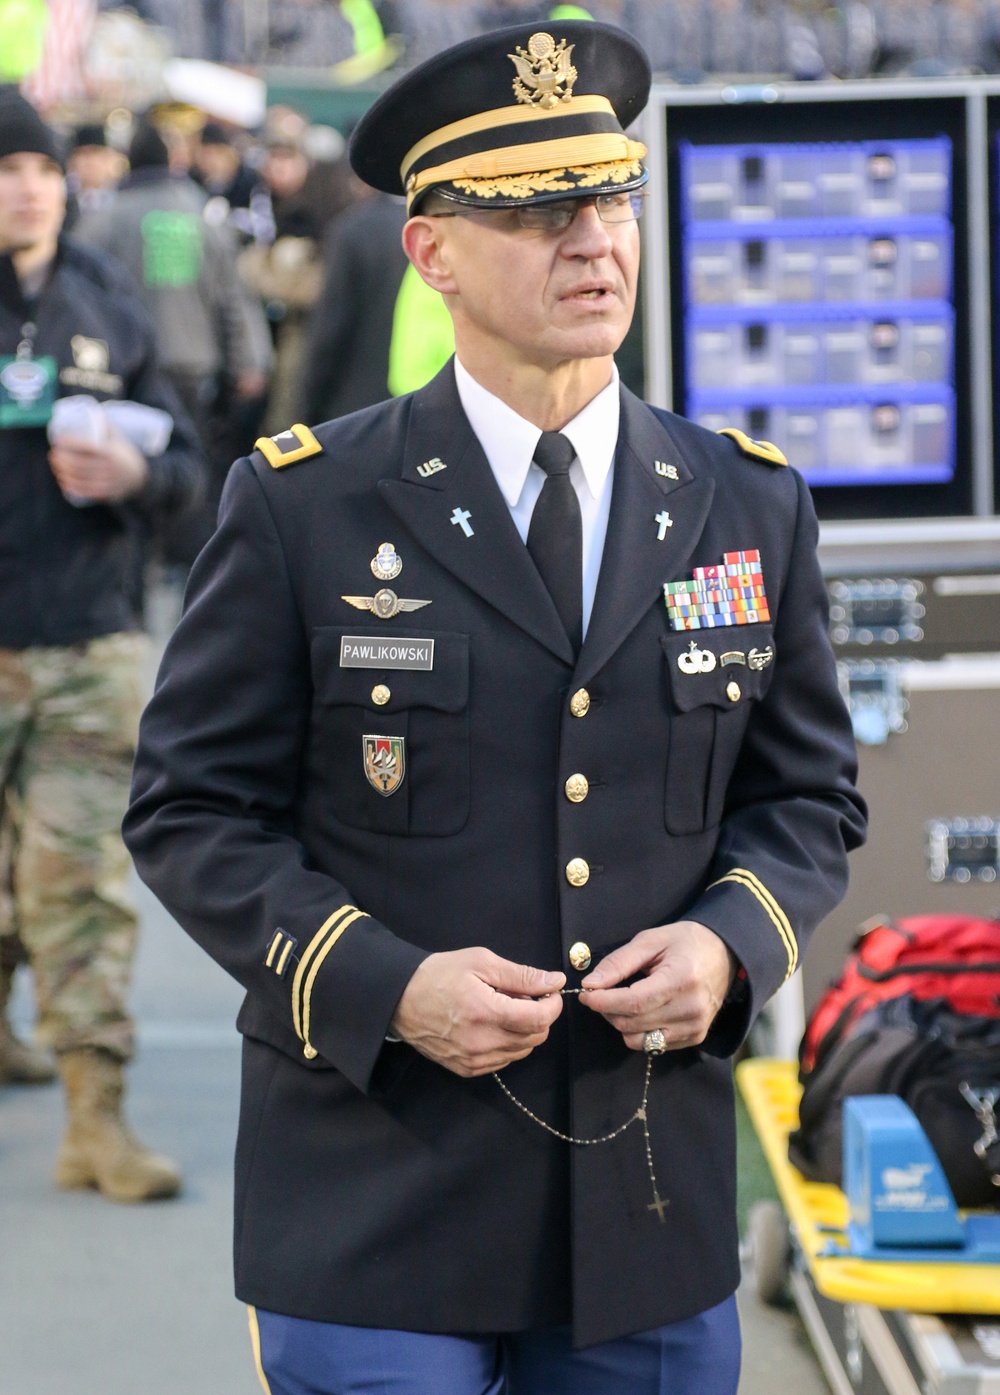 USMA Chaplain prays during Army-Navy Game